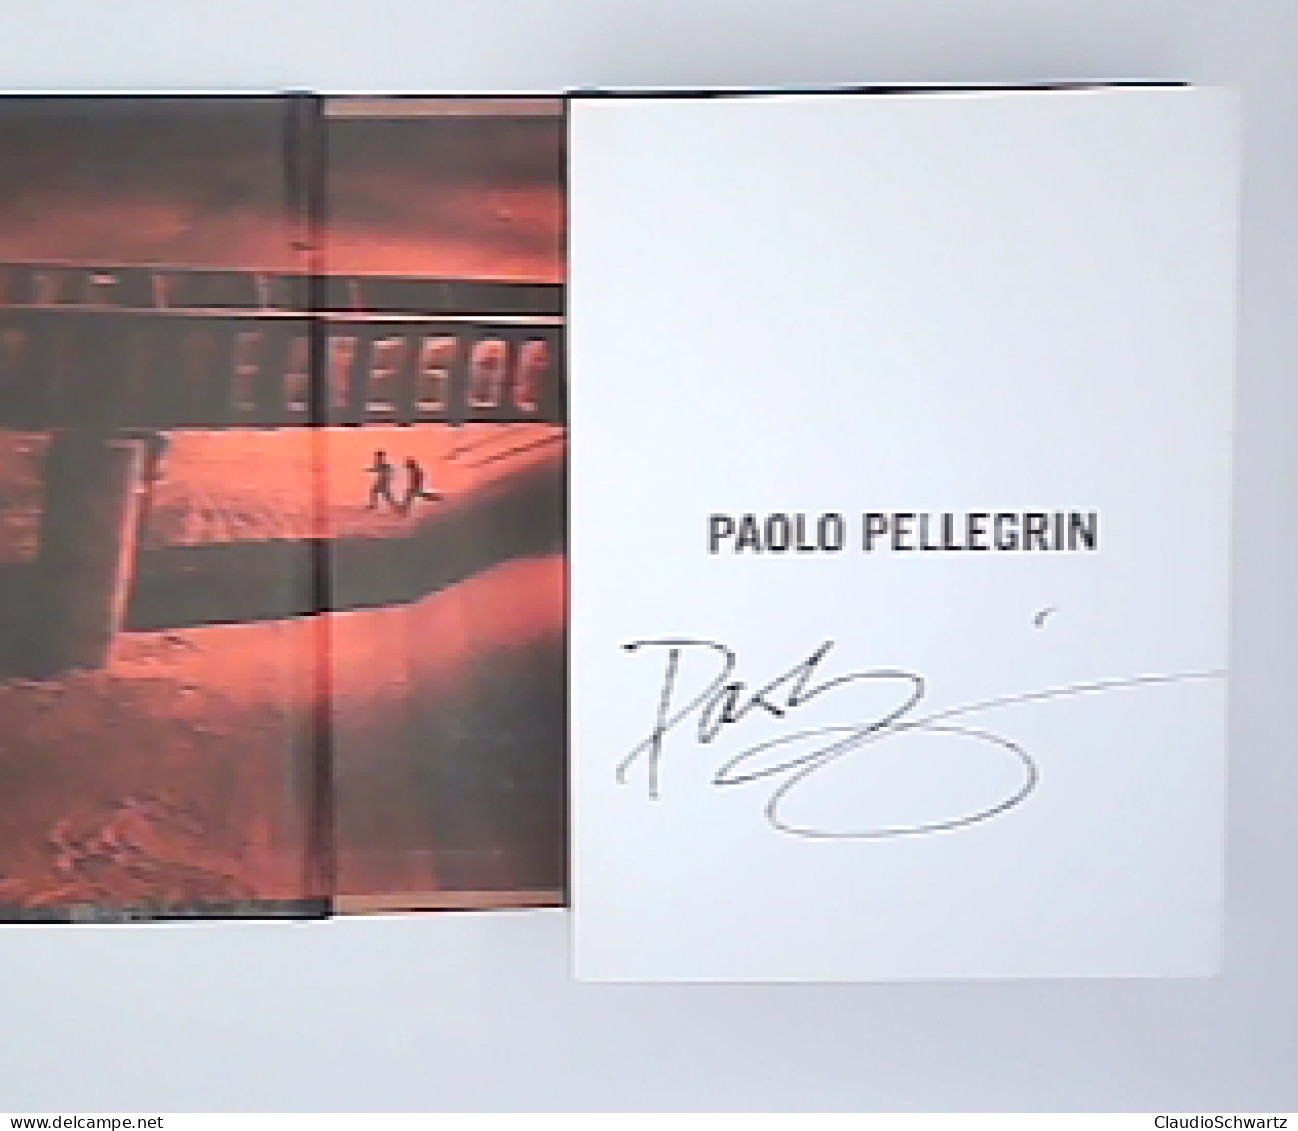 Paolo Pellegrin - Fotografía